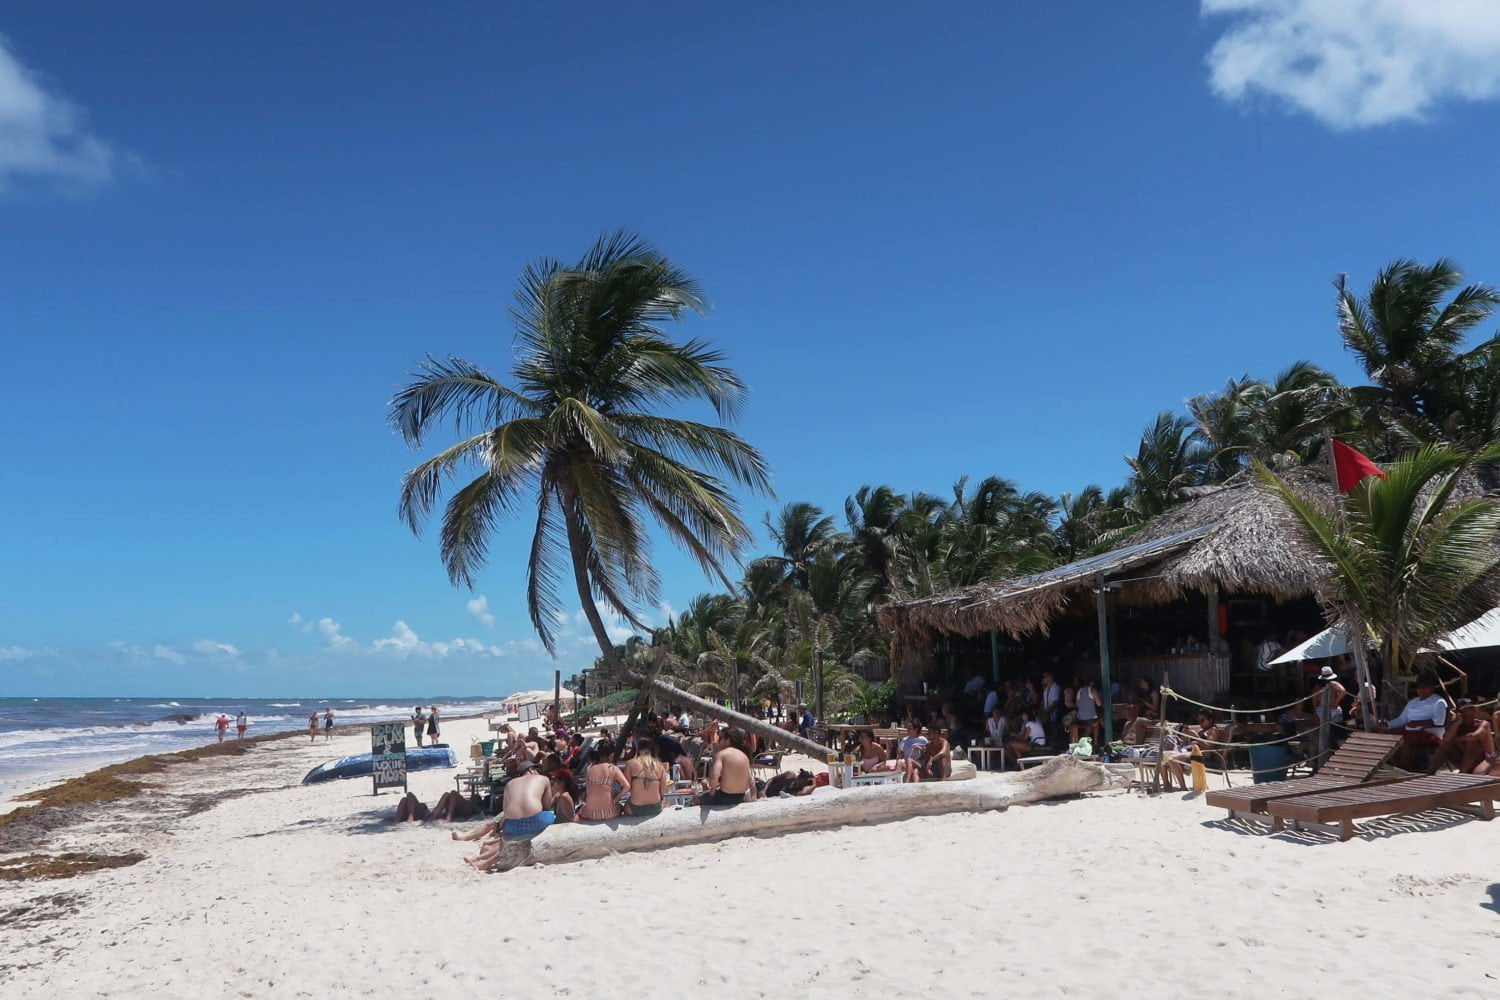 eufemia beach club view from beach in tulum mexico